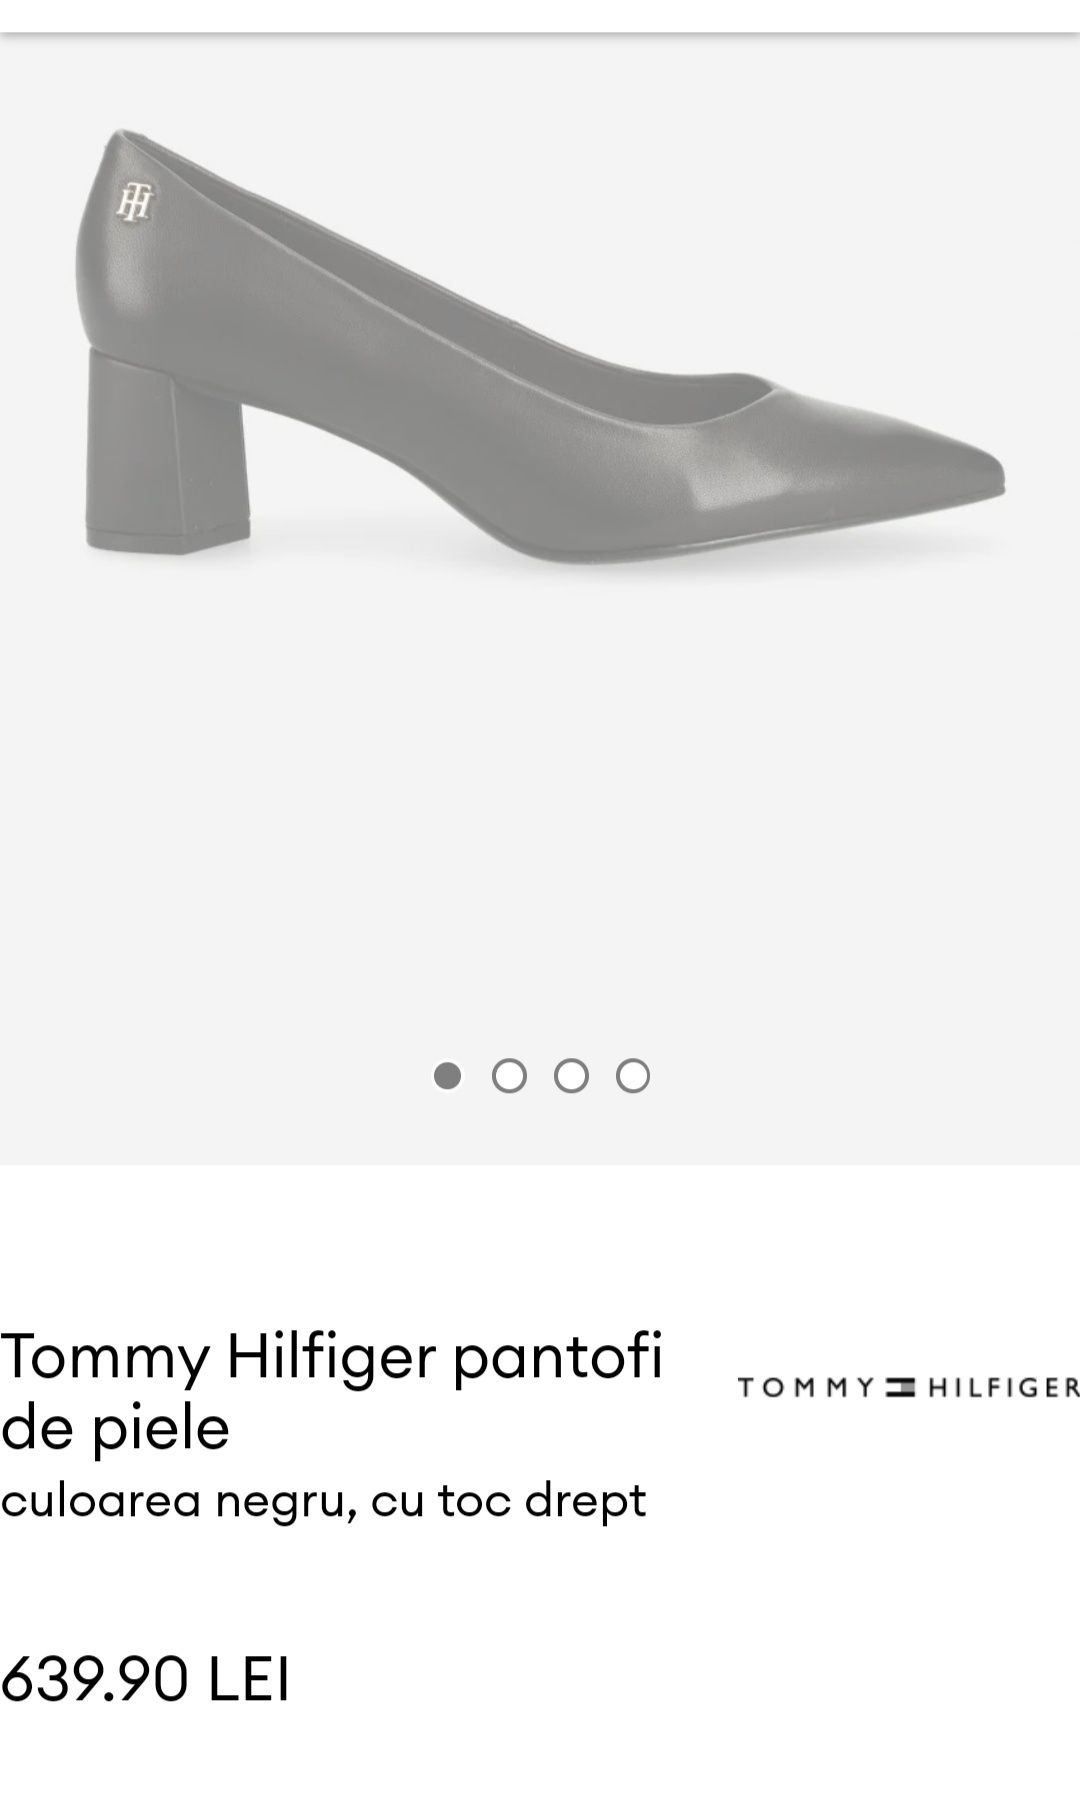 Pantofi Tommy Hilfiger nr.39